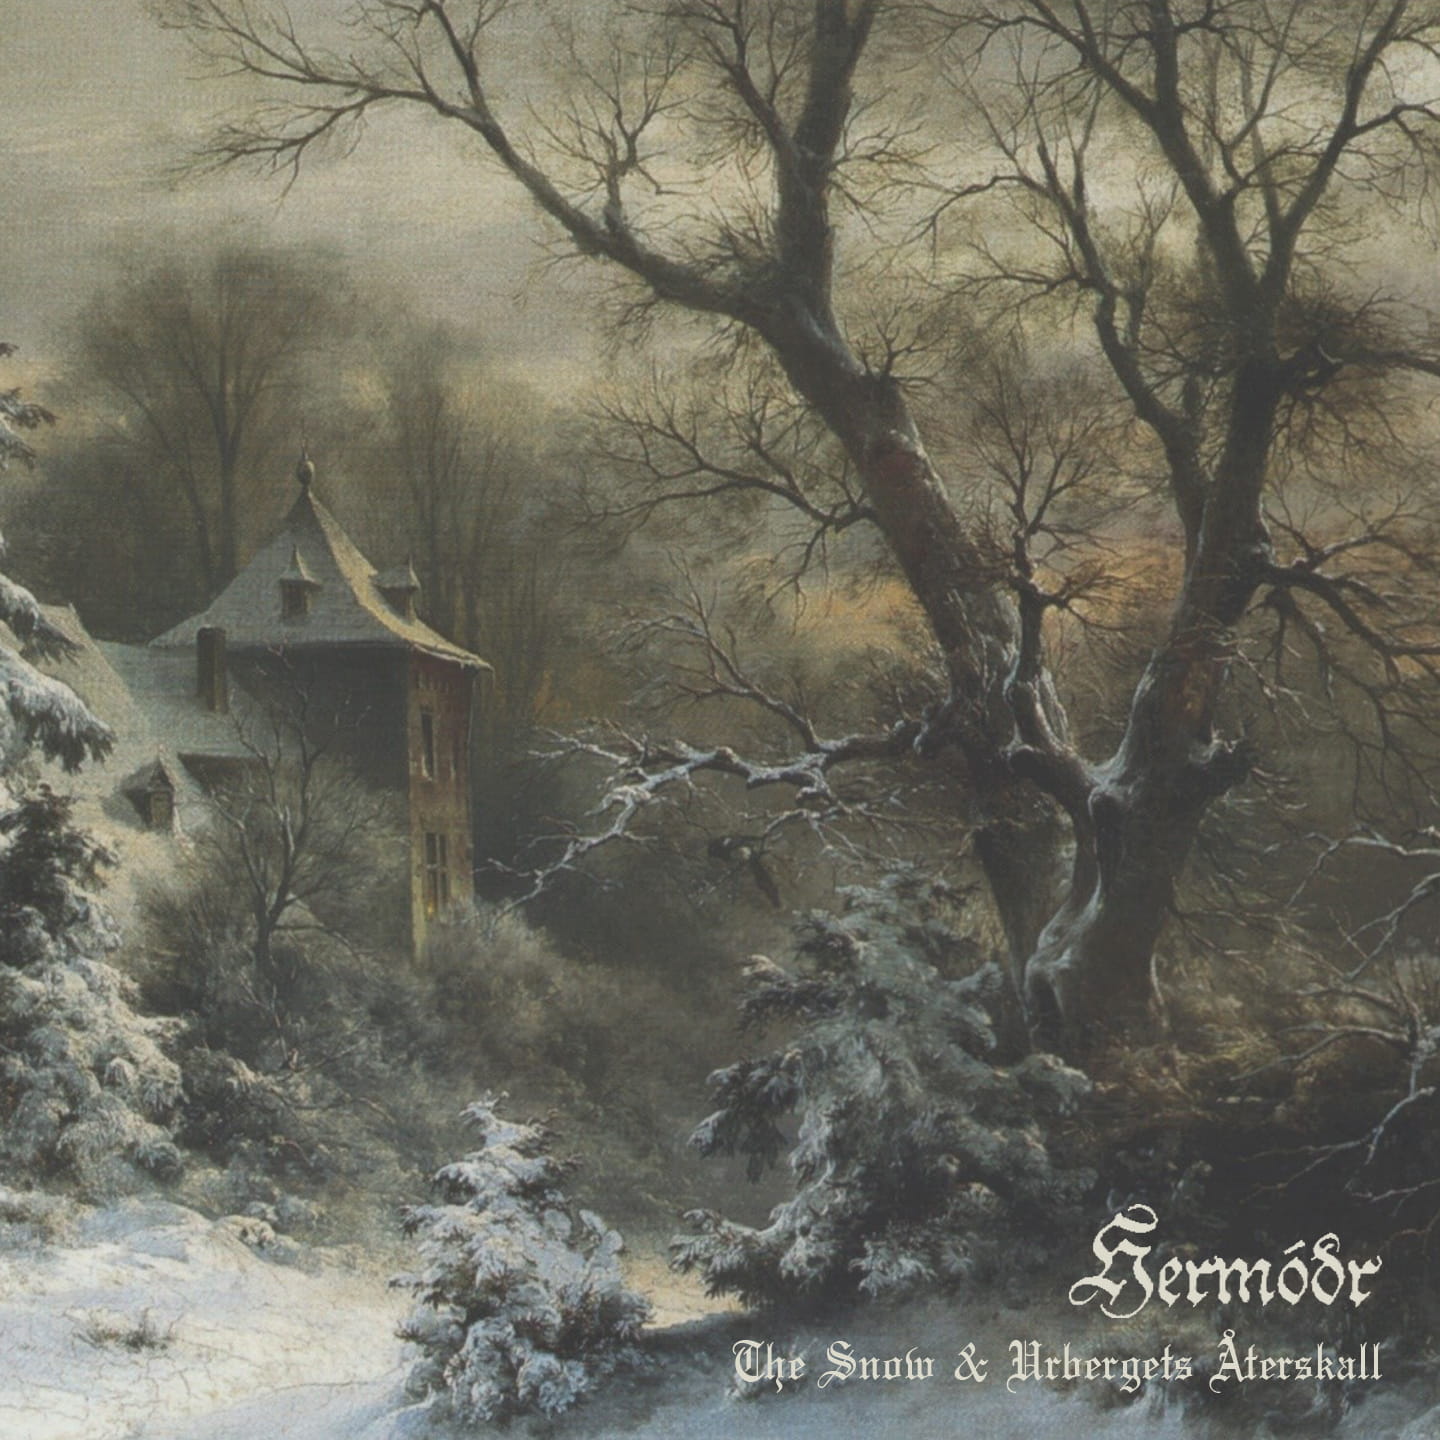 HERMODR - The Snow & Urbergets Aterskall   (Digipack)